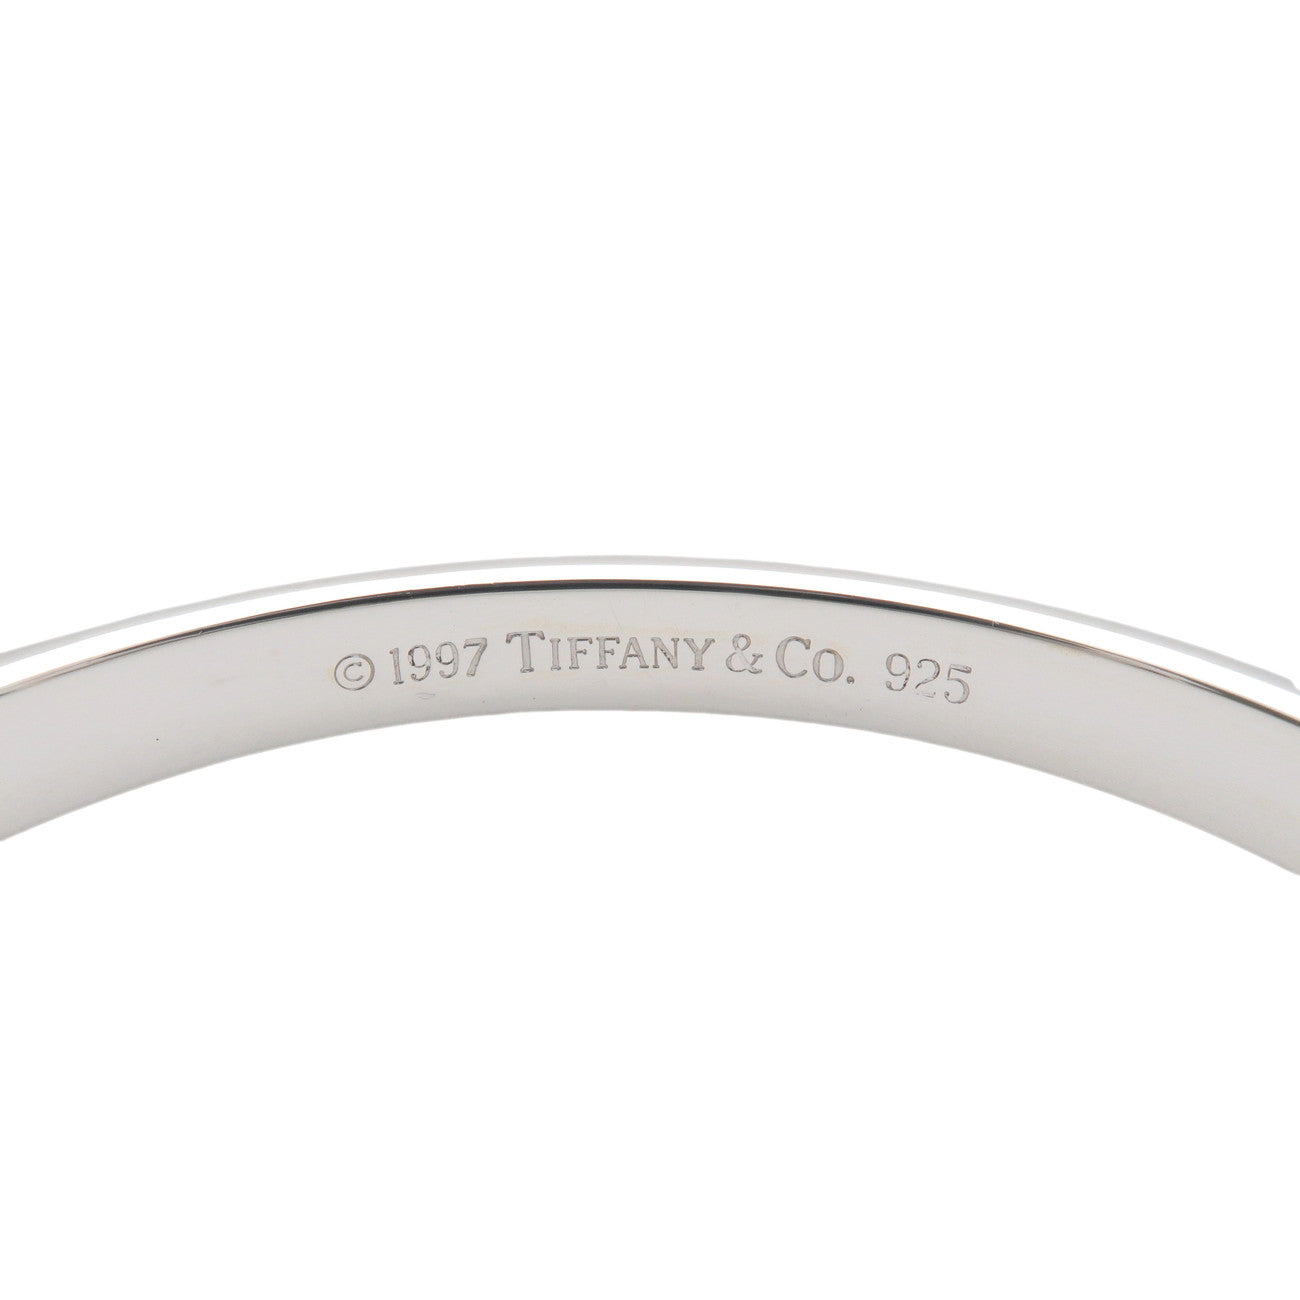 Tiffany&Co. 1837 Narrow Bangle Bracelet SV925 Silver 925